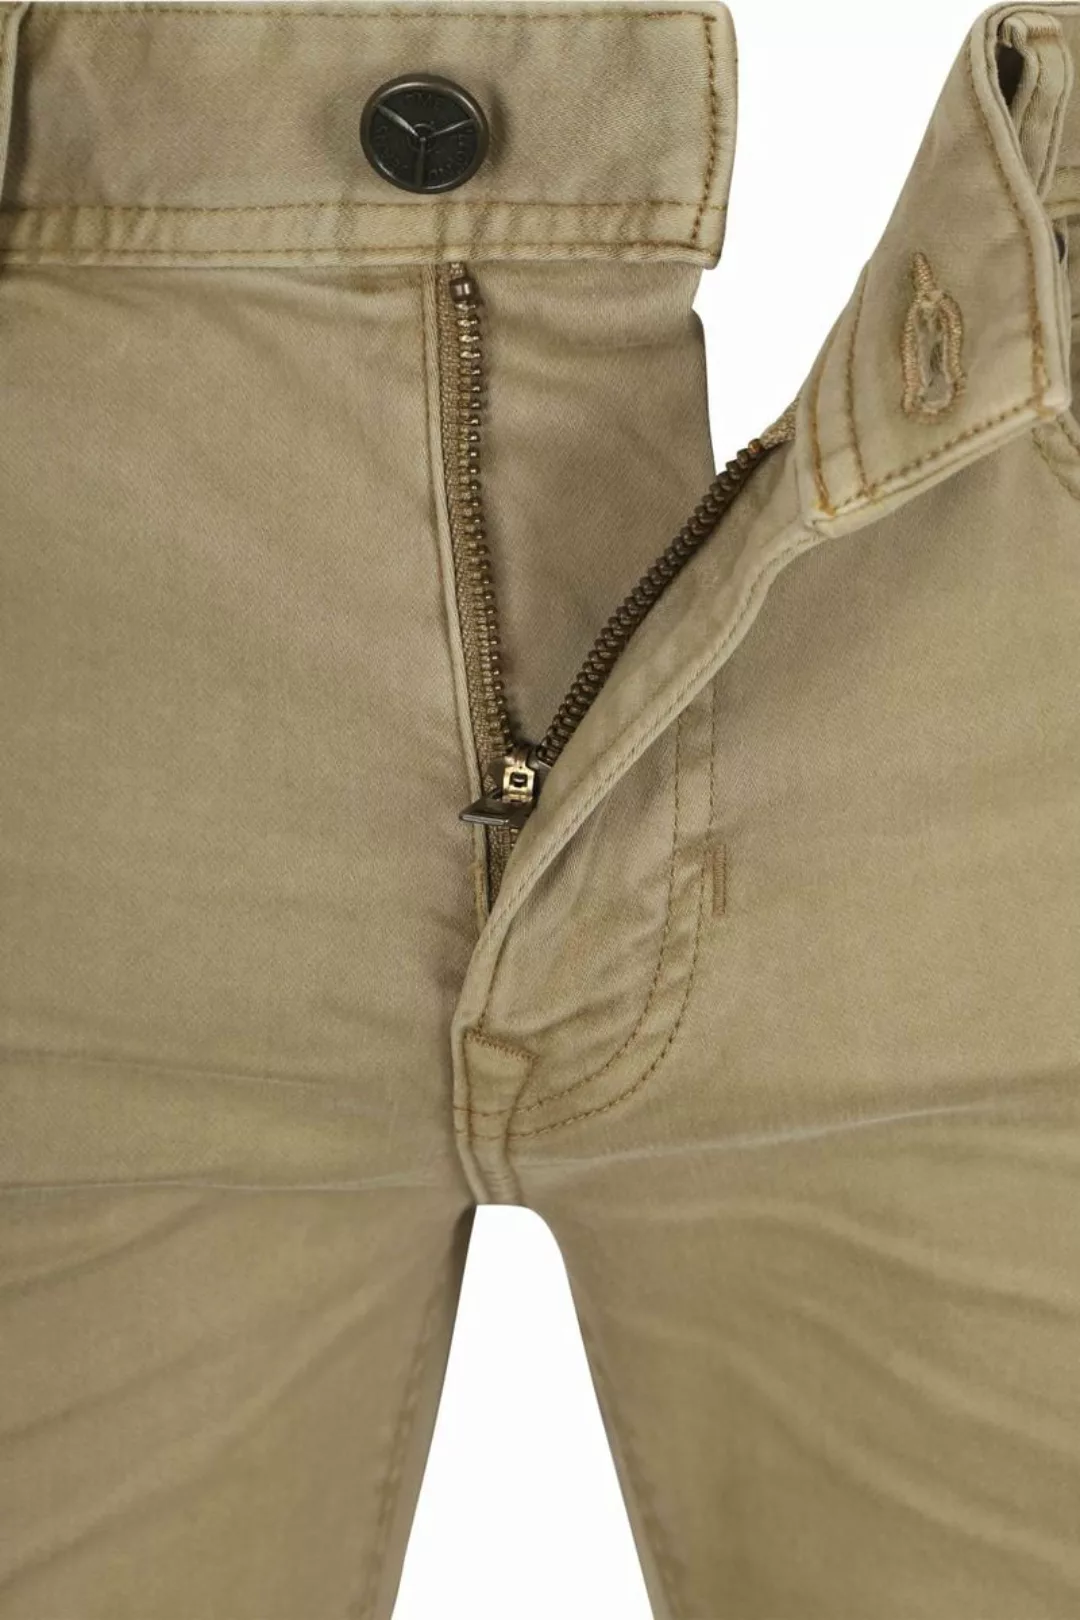 PME Legend Tailwheel Jeans Khaki - Größe W 33 - L 34 günstig online kaufen